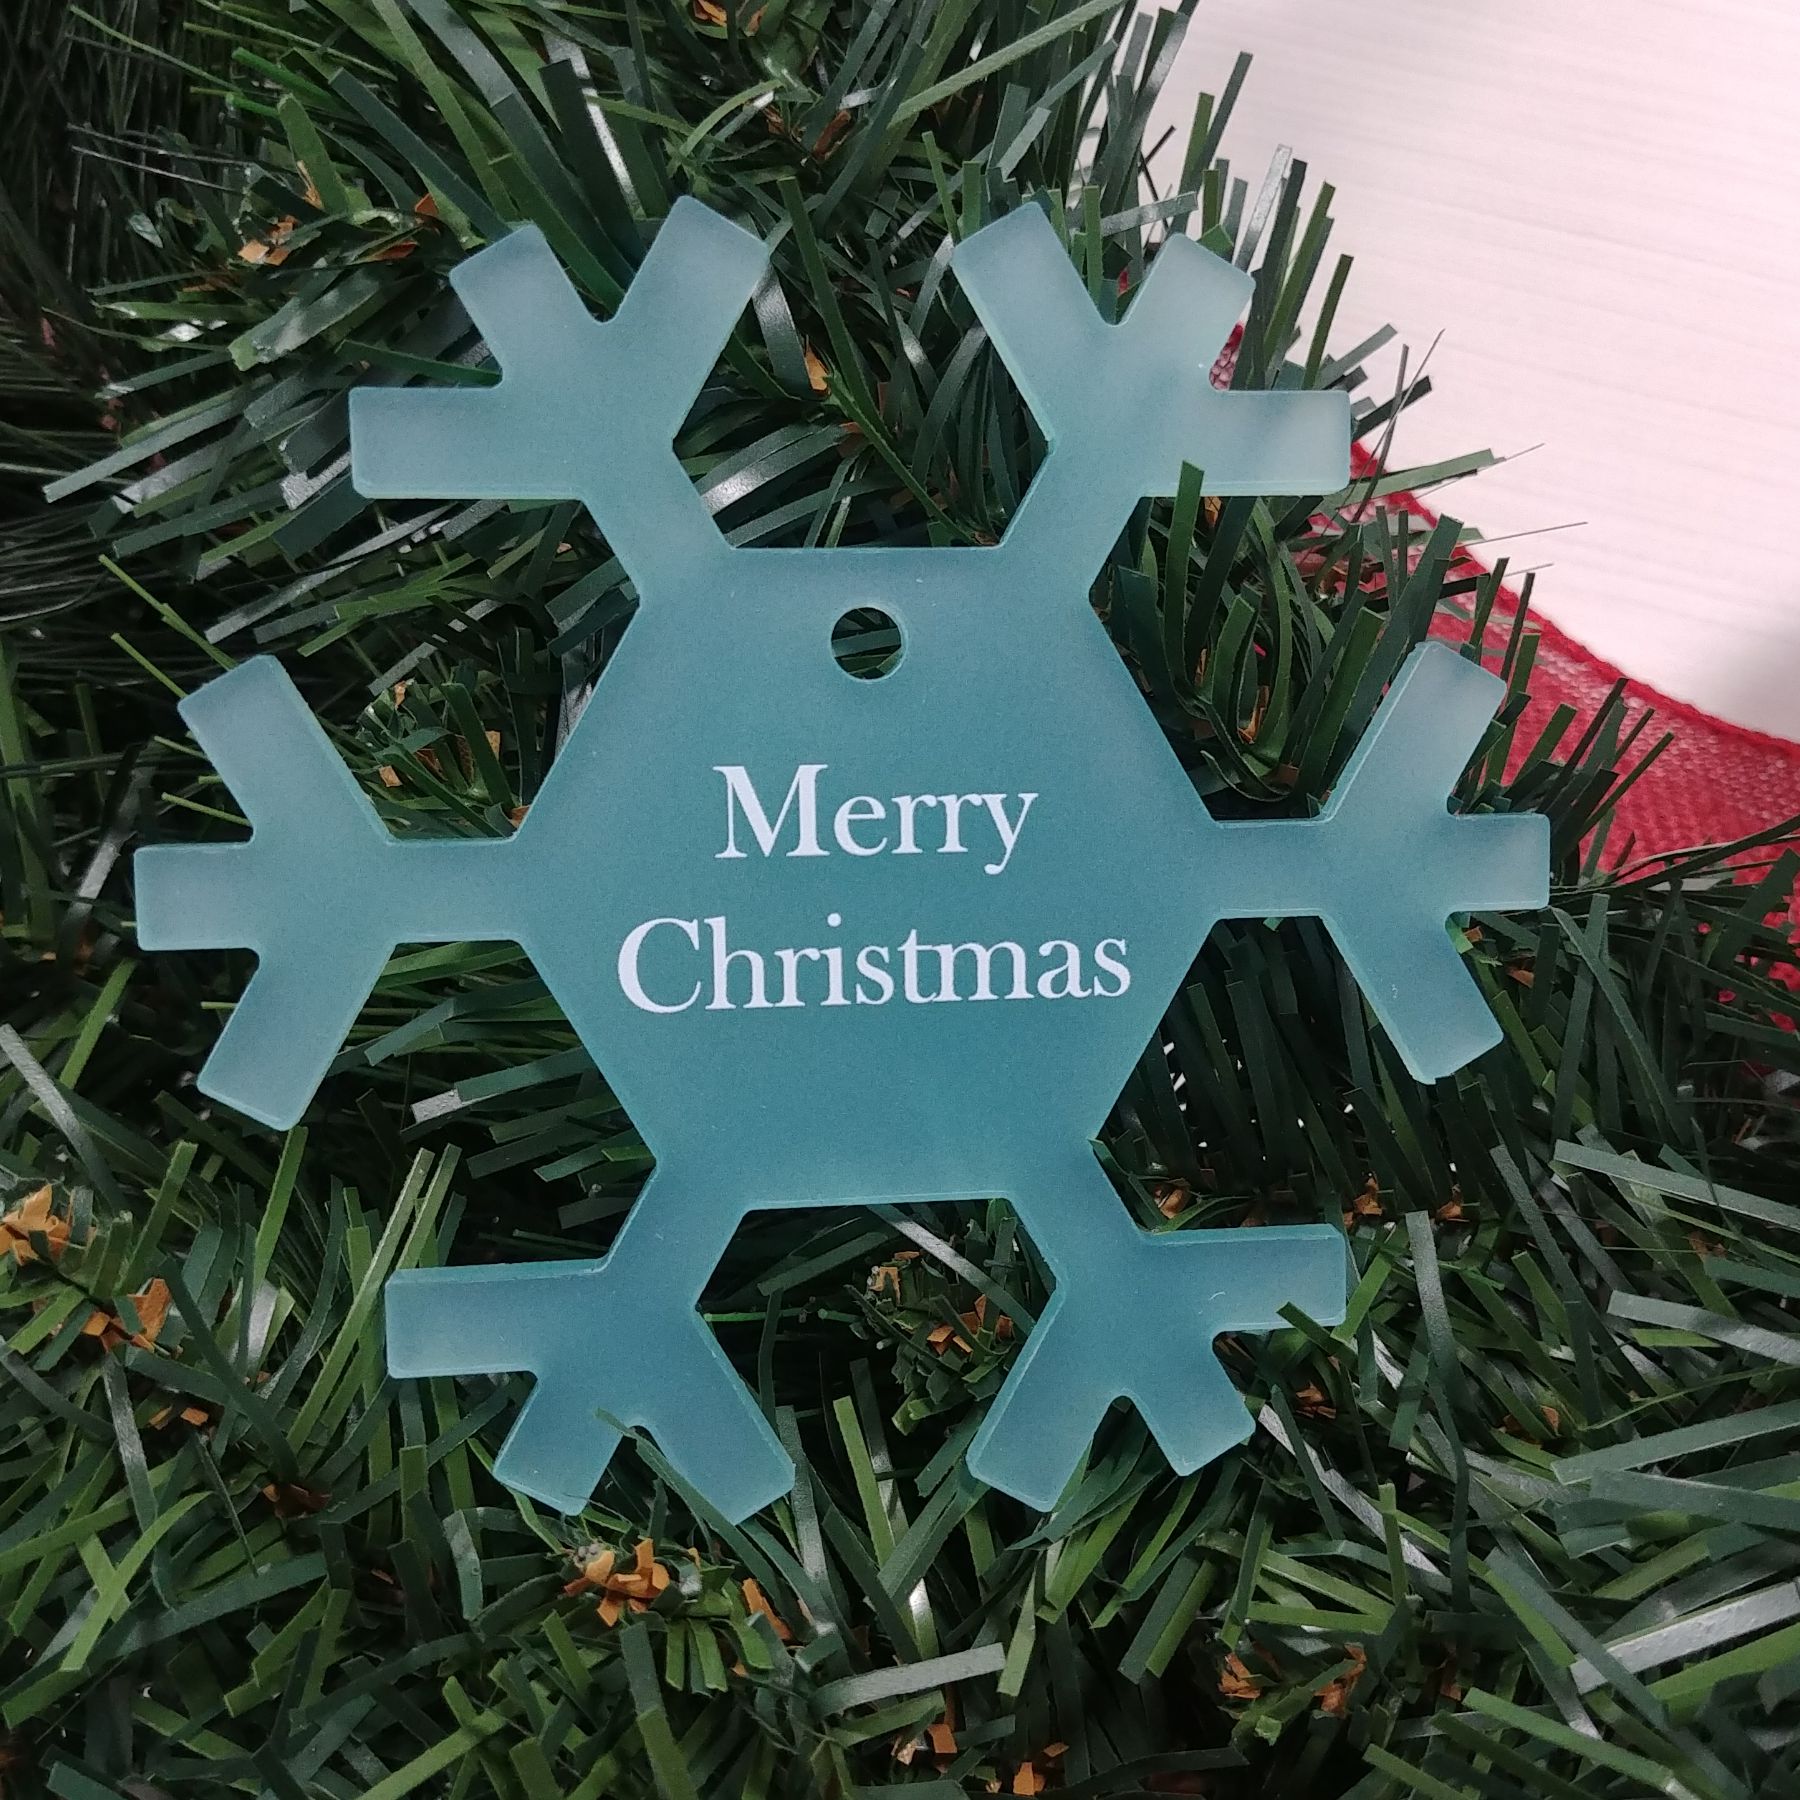 Custom made snowflake Christmas ornaments